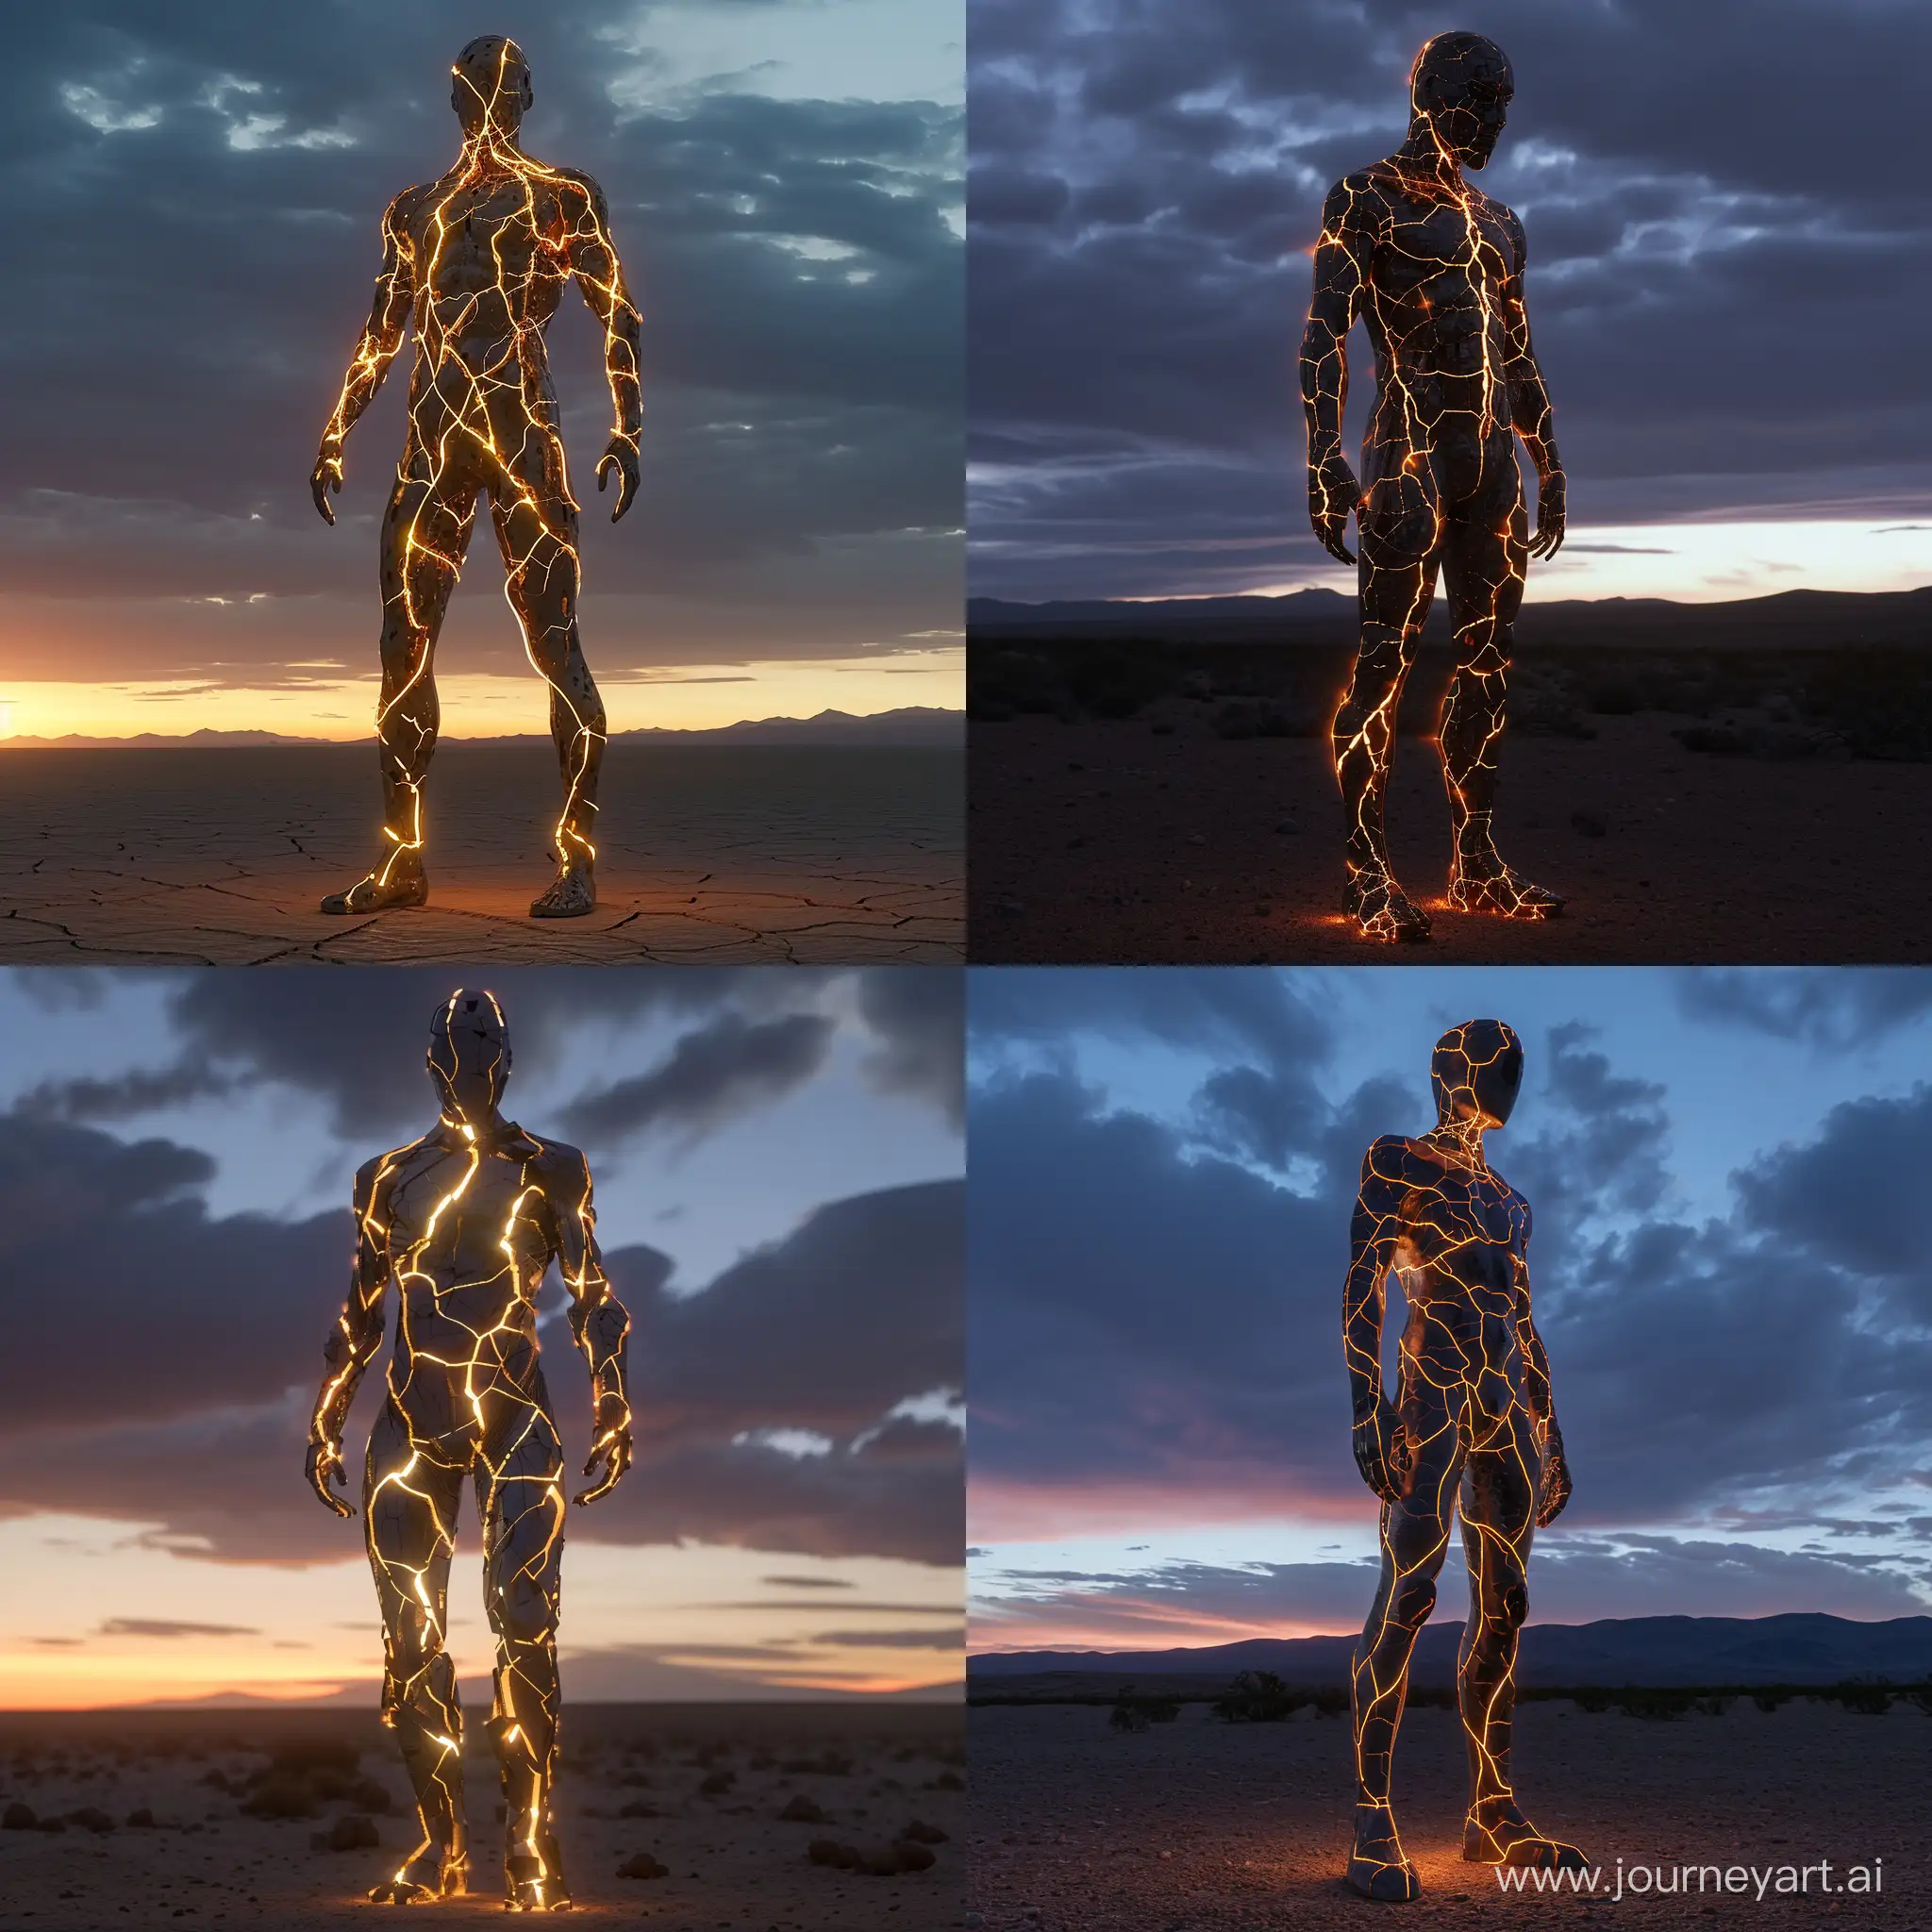 Meta Human with bio-illuminated cracks like veins, all over body, standing on an open desert evening